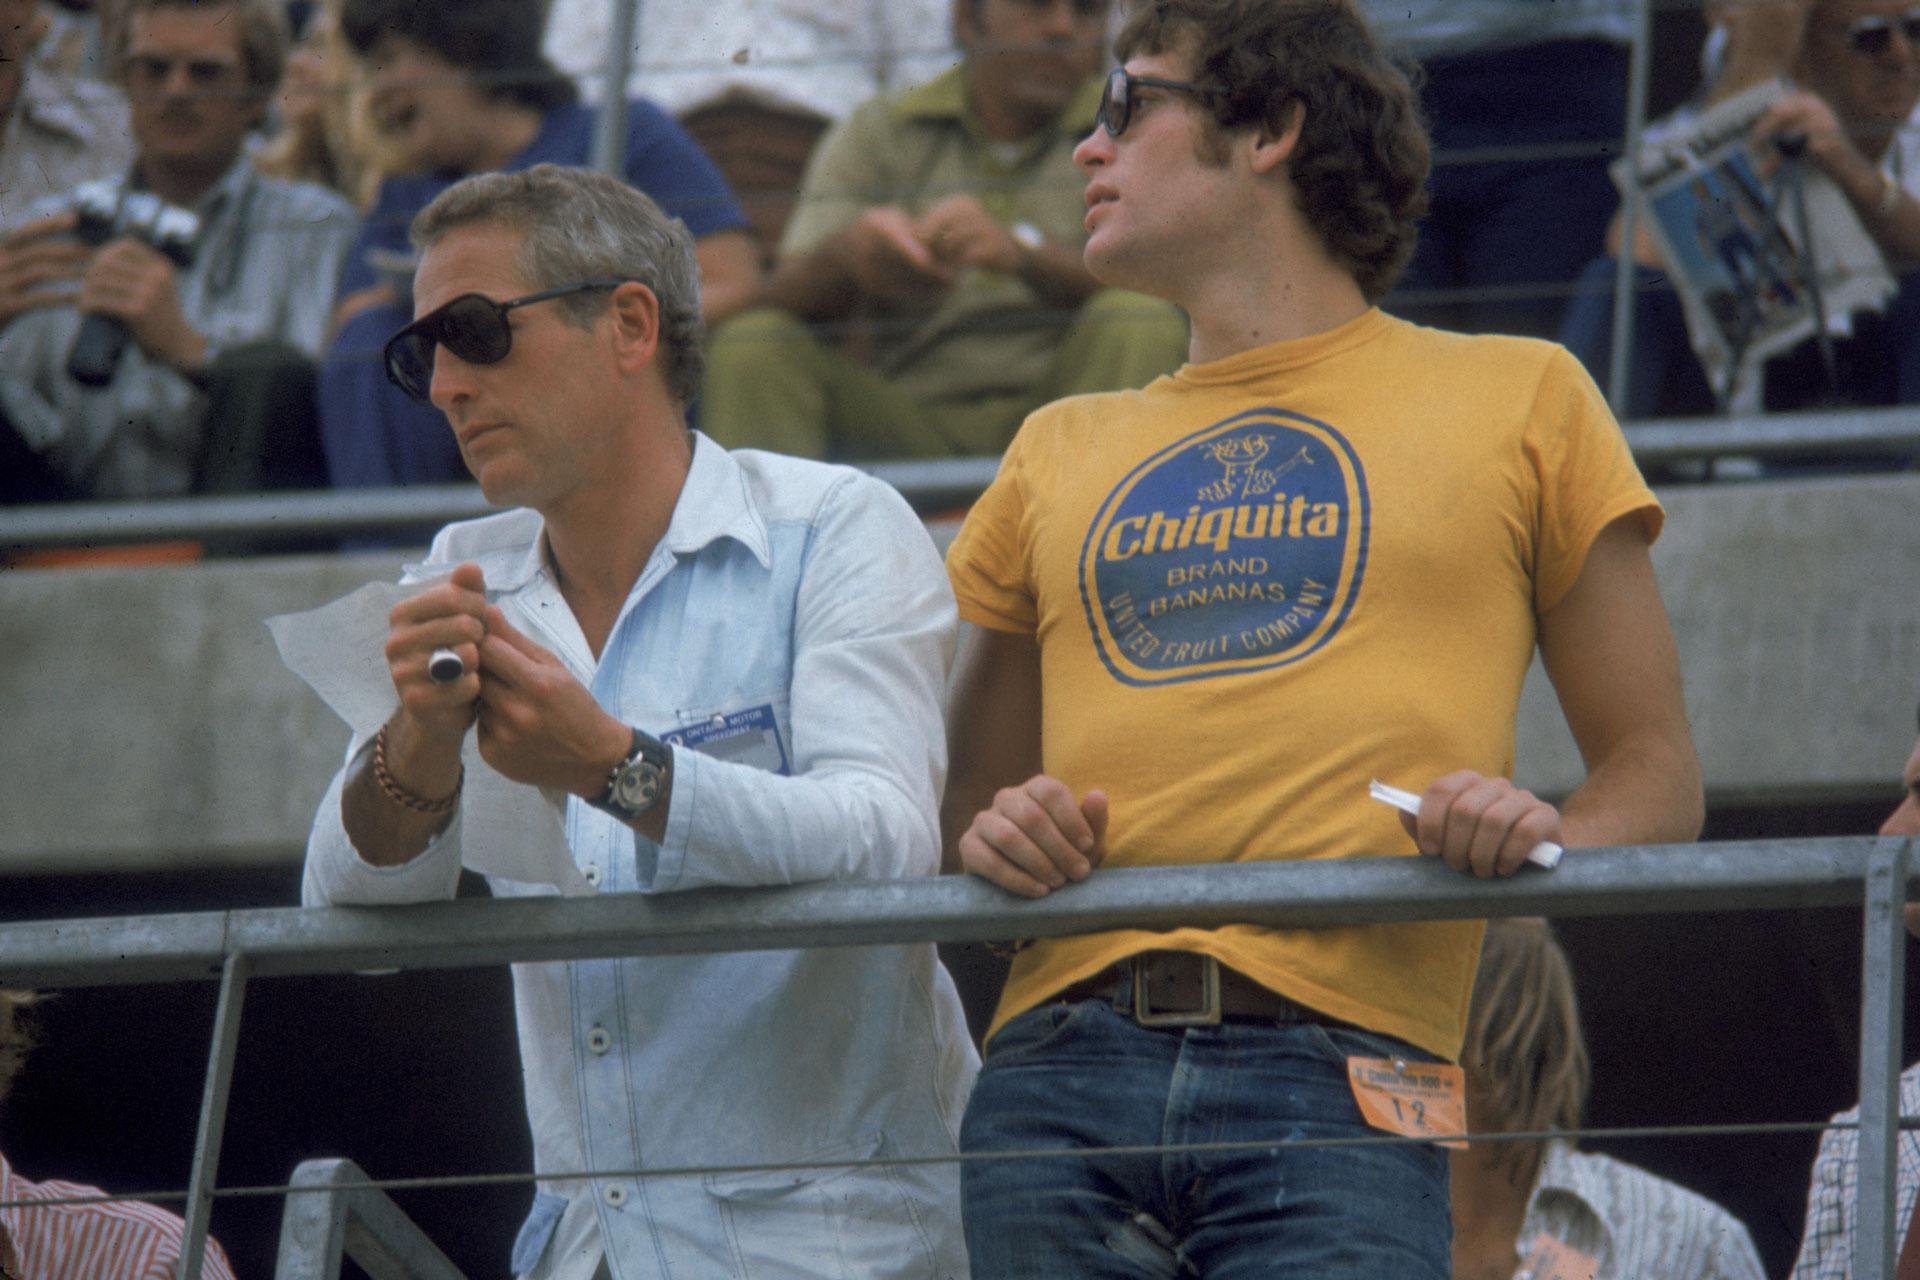 Paul Newman and his son Scott Newman